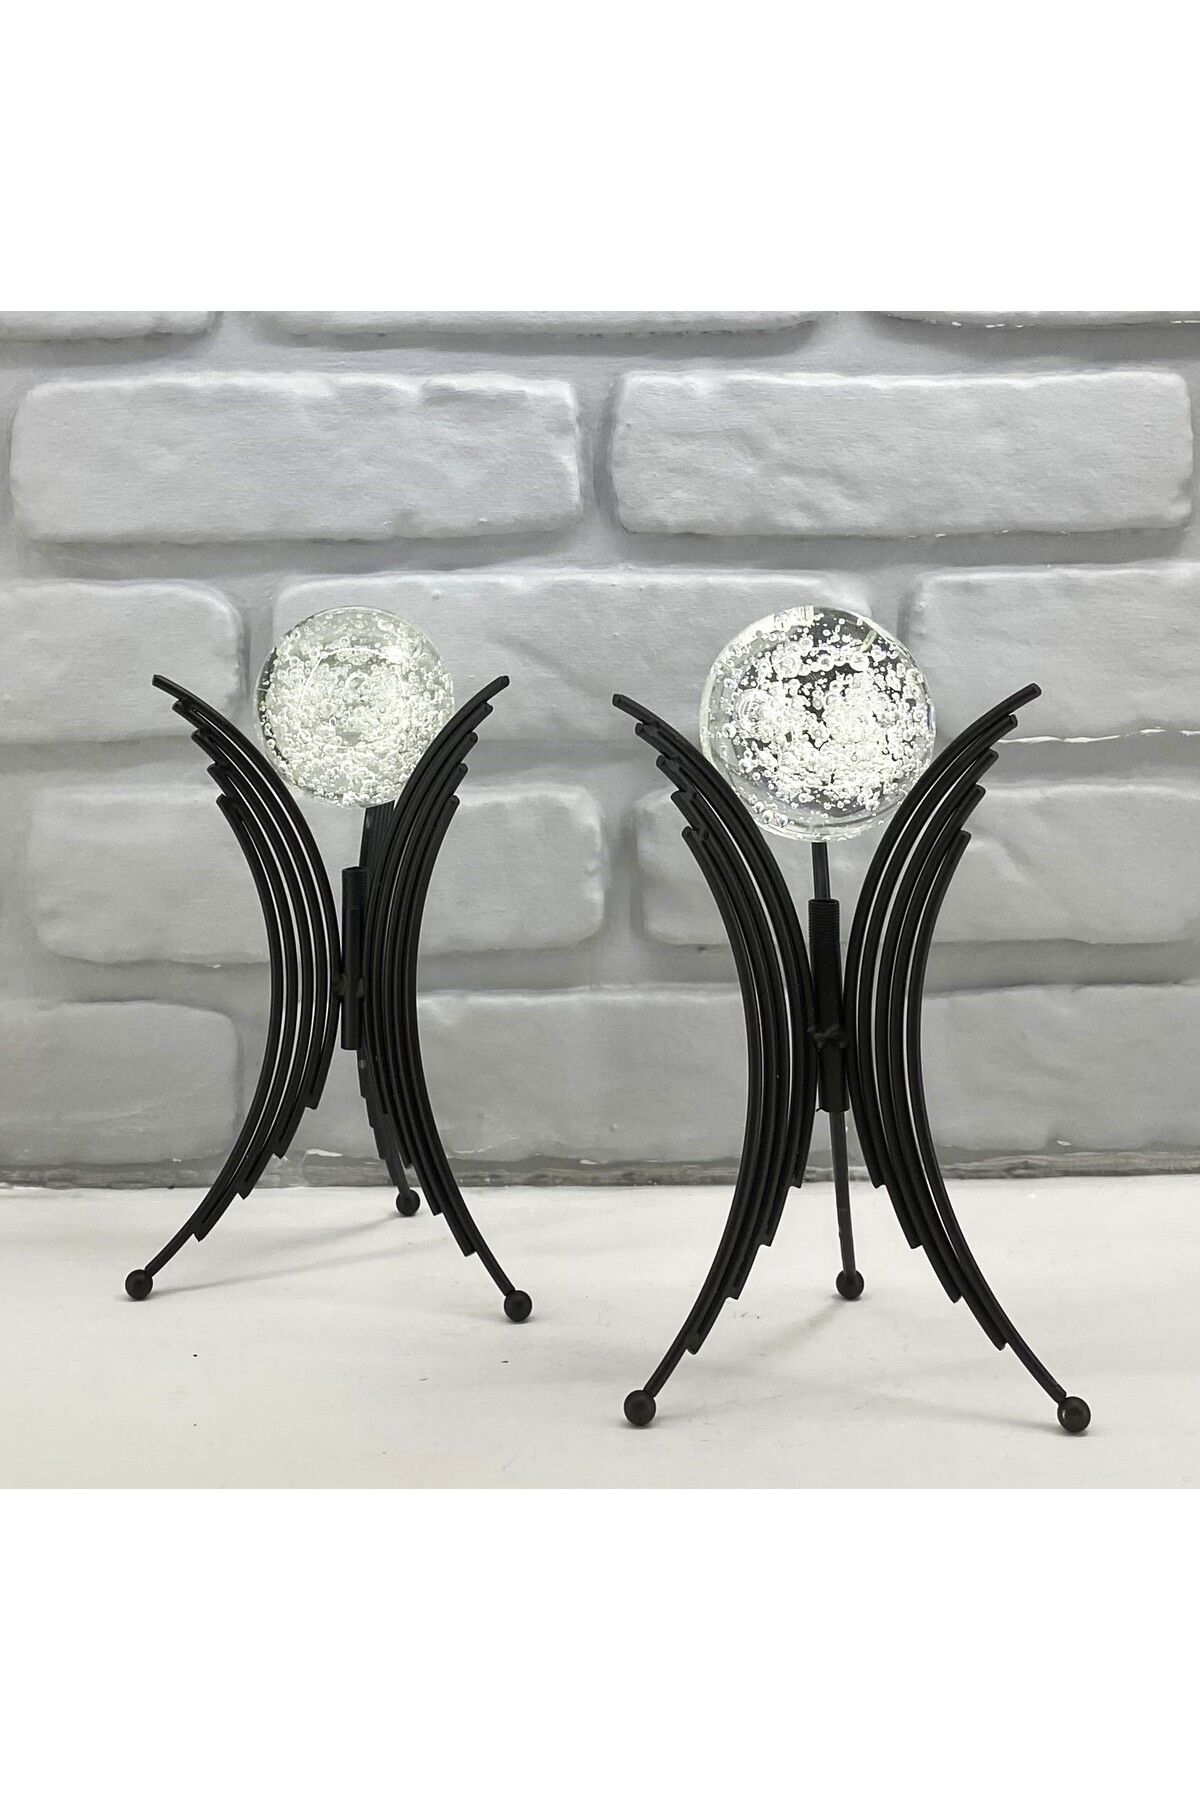 365GUNSERİSONU Siyah Metal 2'li Set Salon Angel Model Kristal Baloncuk Cam Toplu Aksesuar Dekorasyon Biblo Obje